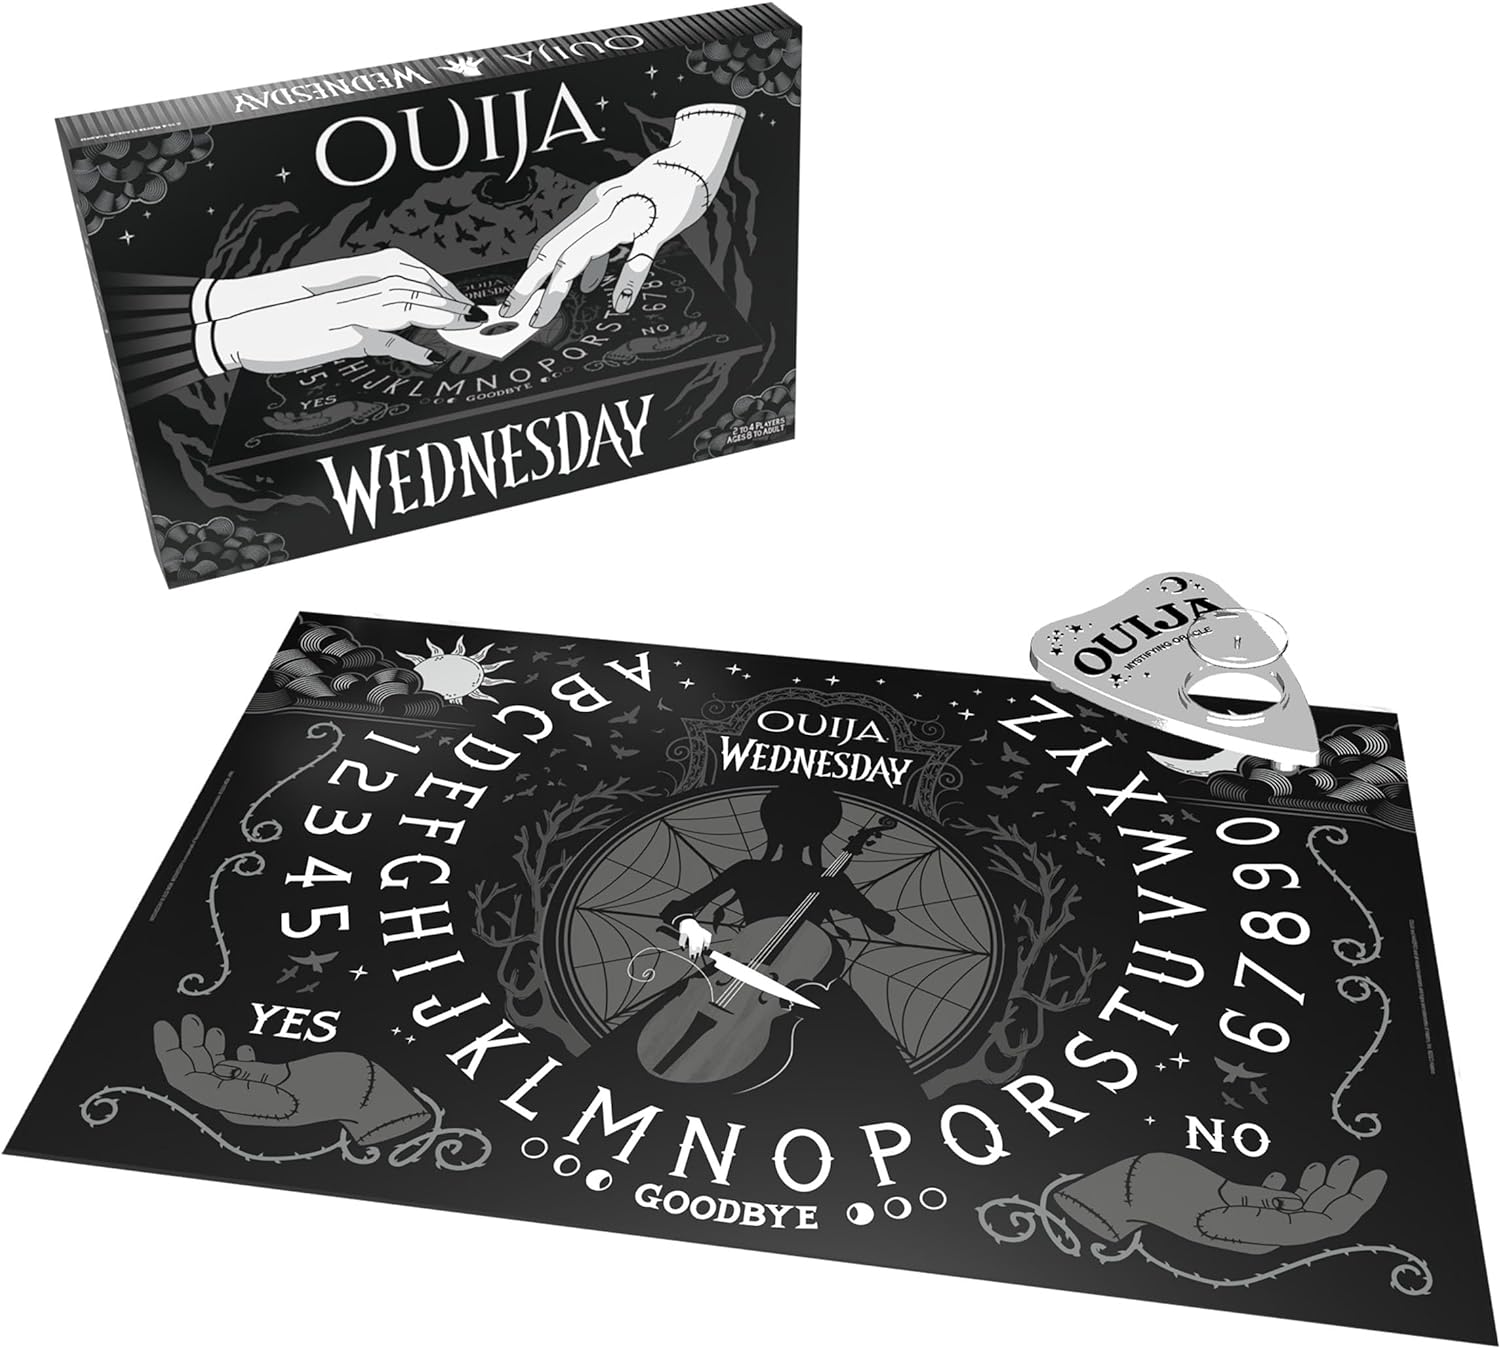 Wednesday Ouija